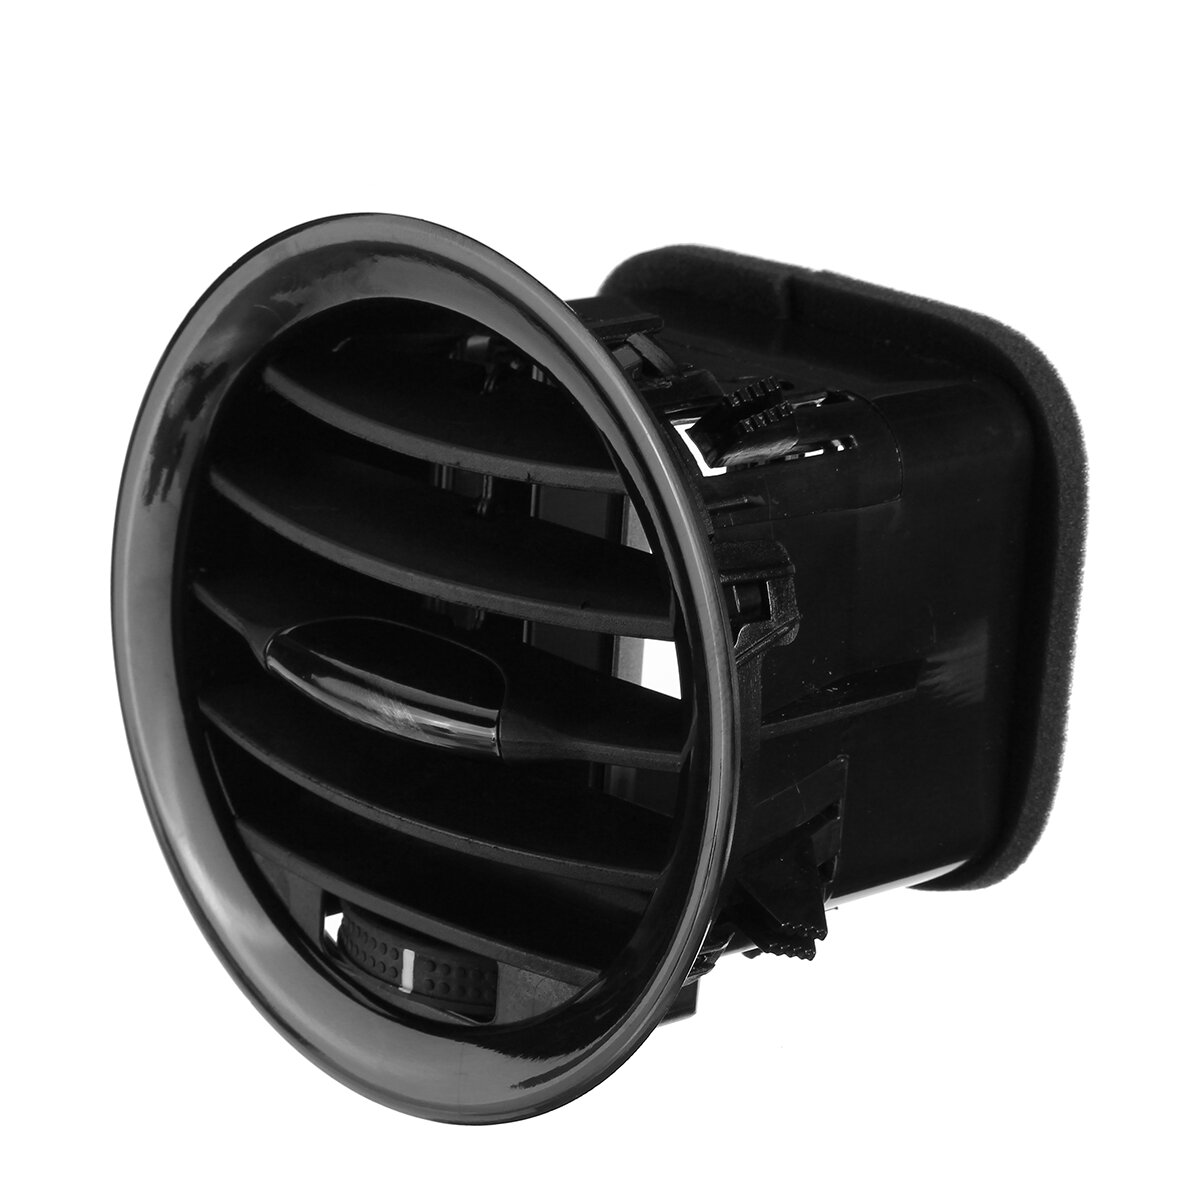 Black Interior Heater Air Vent Nozzle Grille For Vauxhall Opel ADAM CORSA D MK III